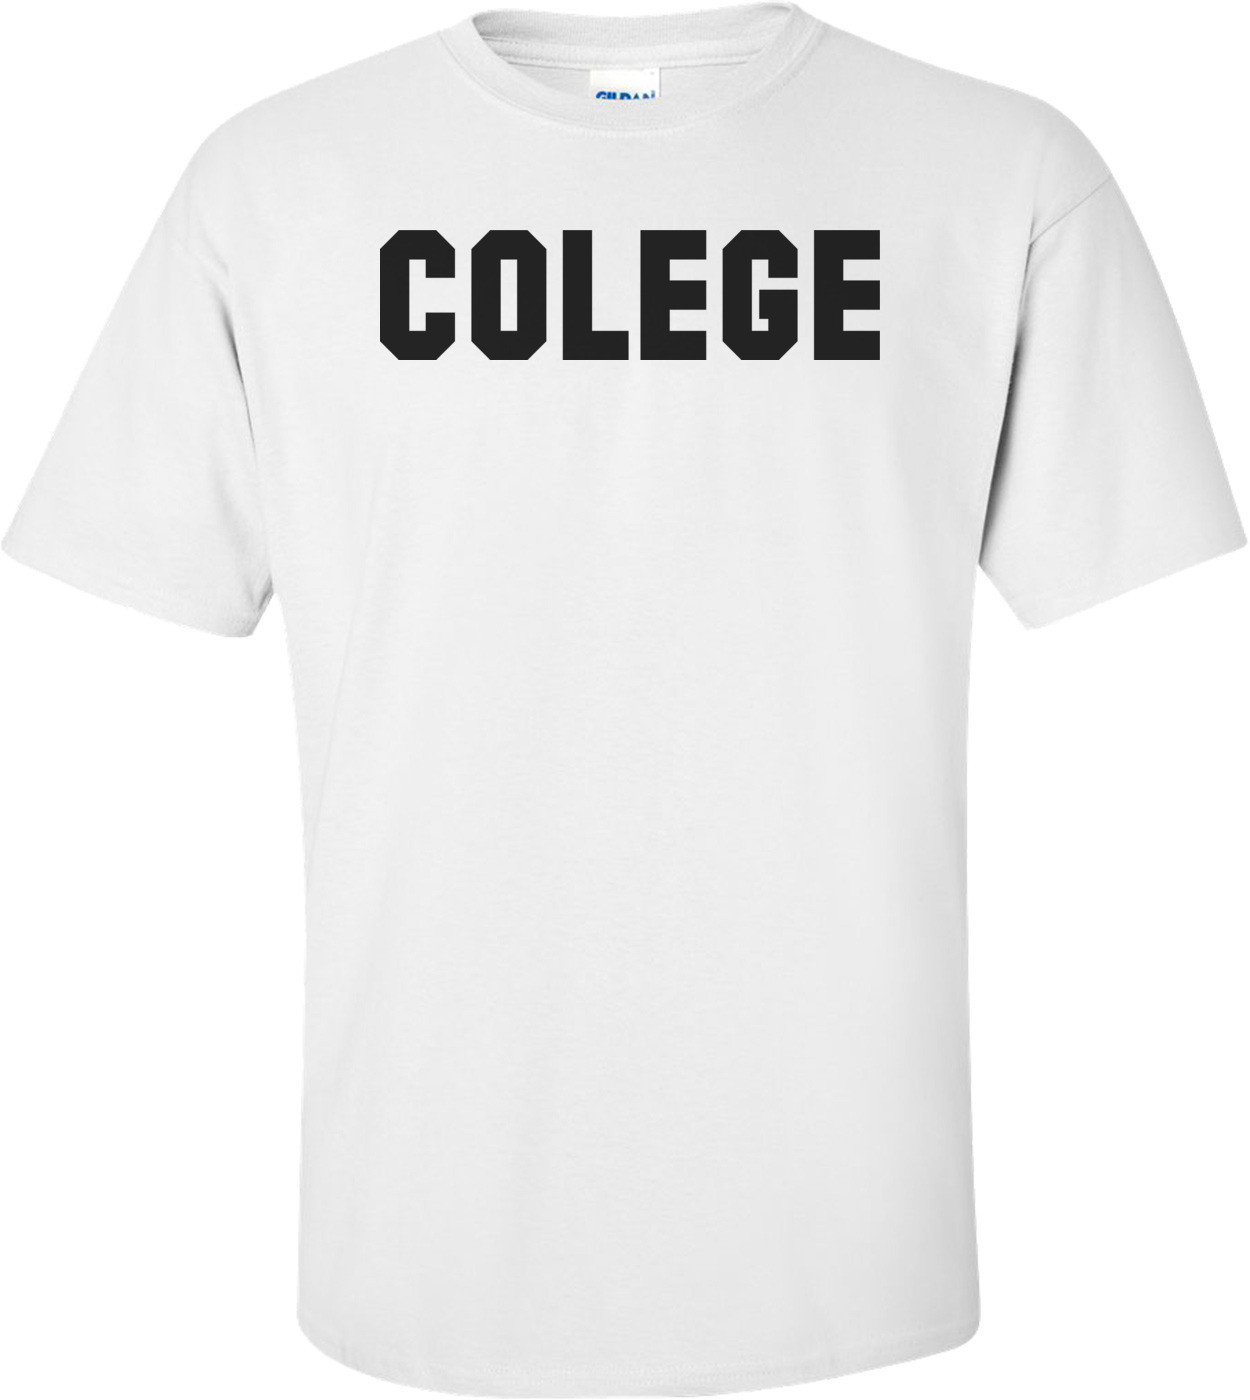 Colege T-shirt